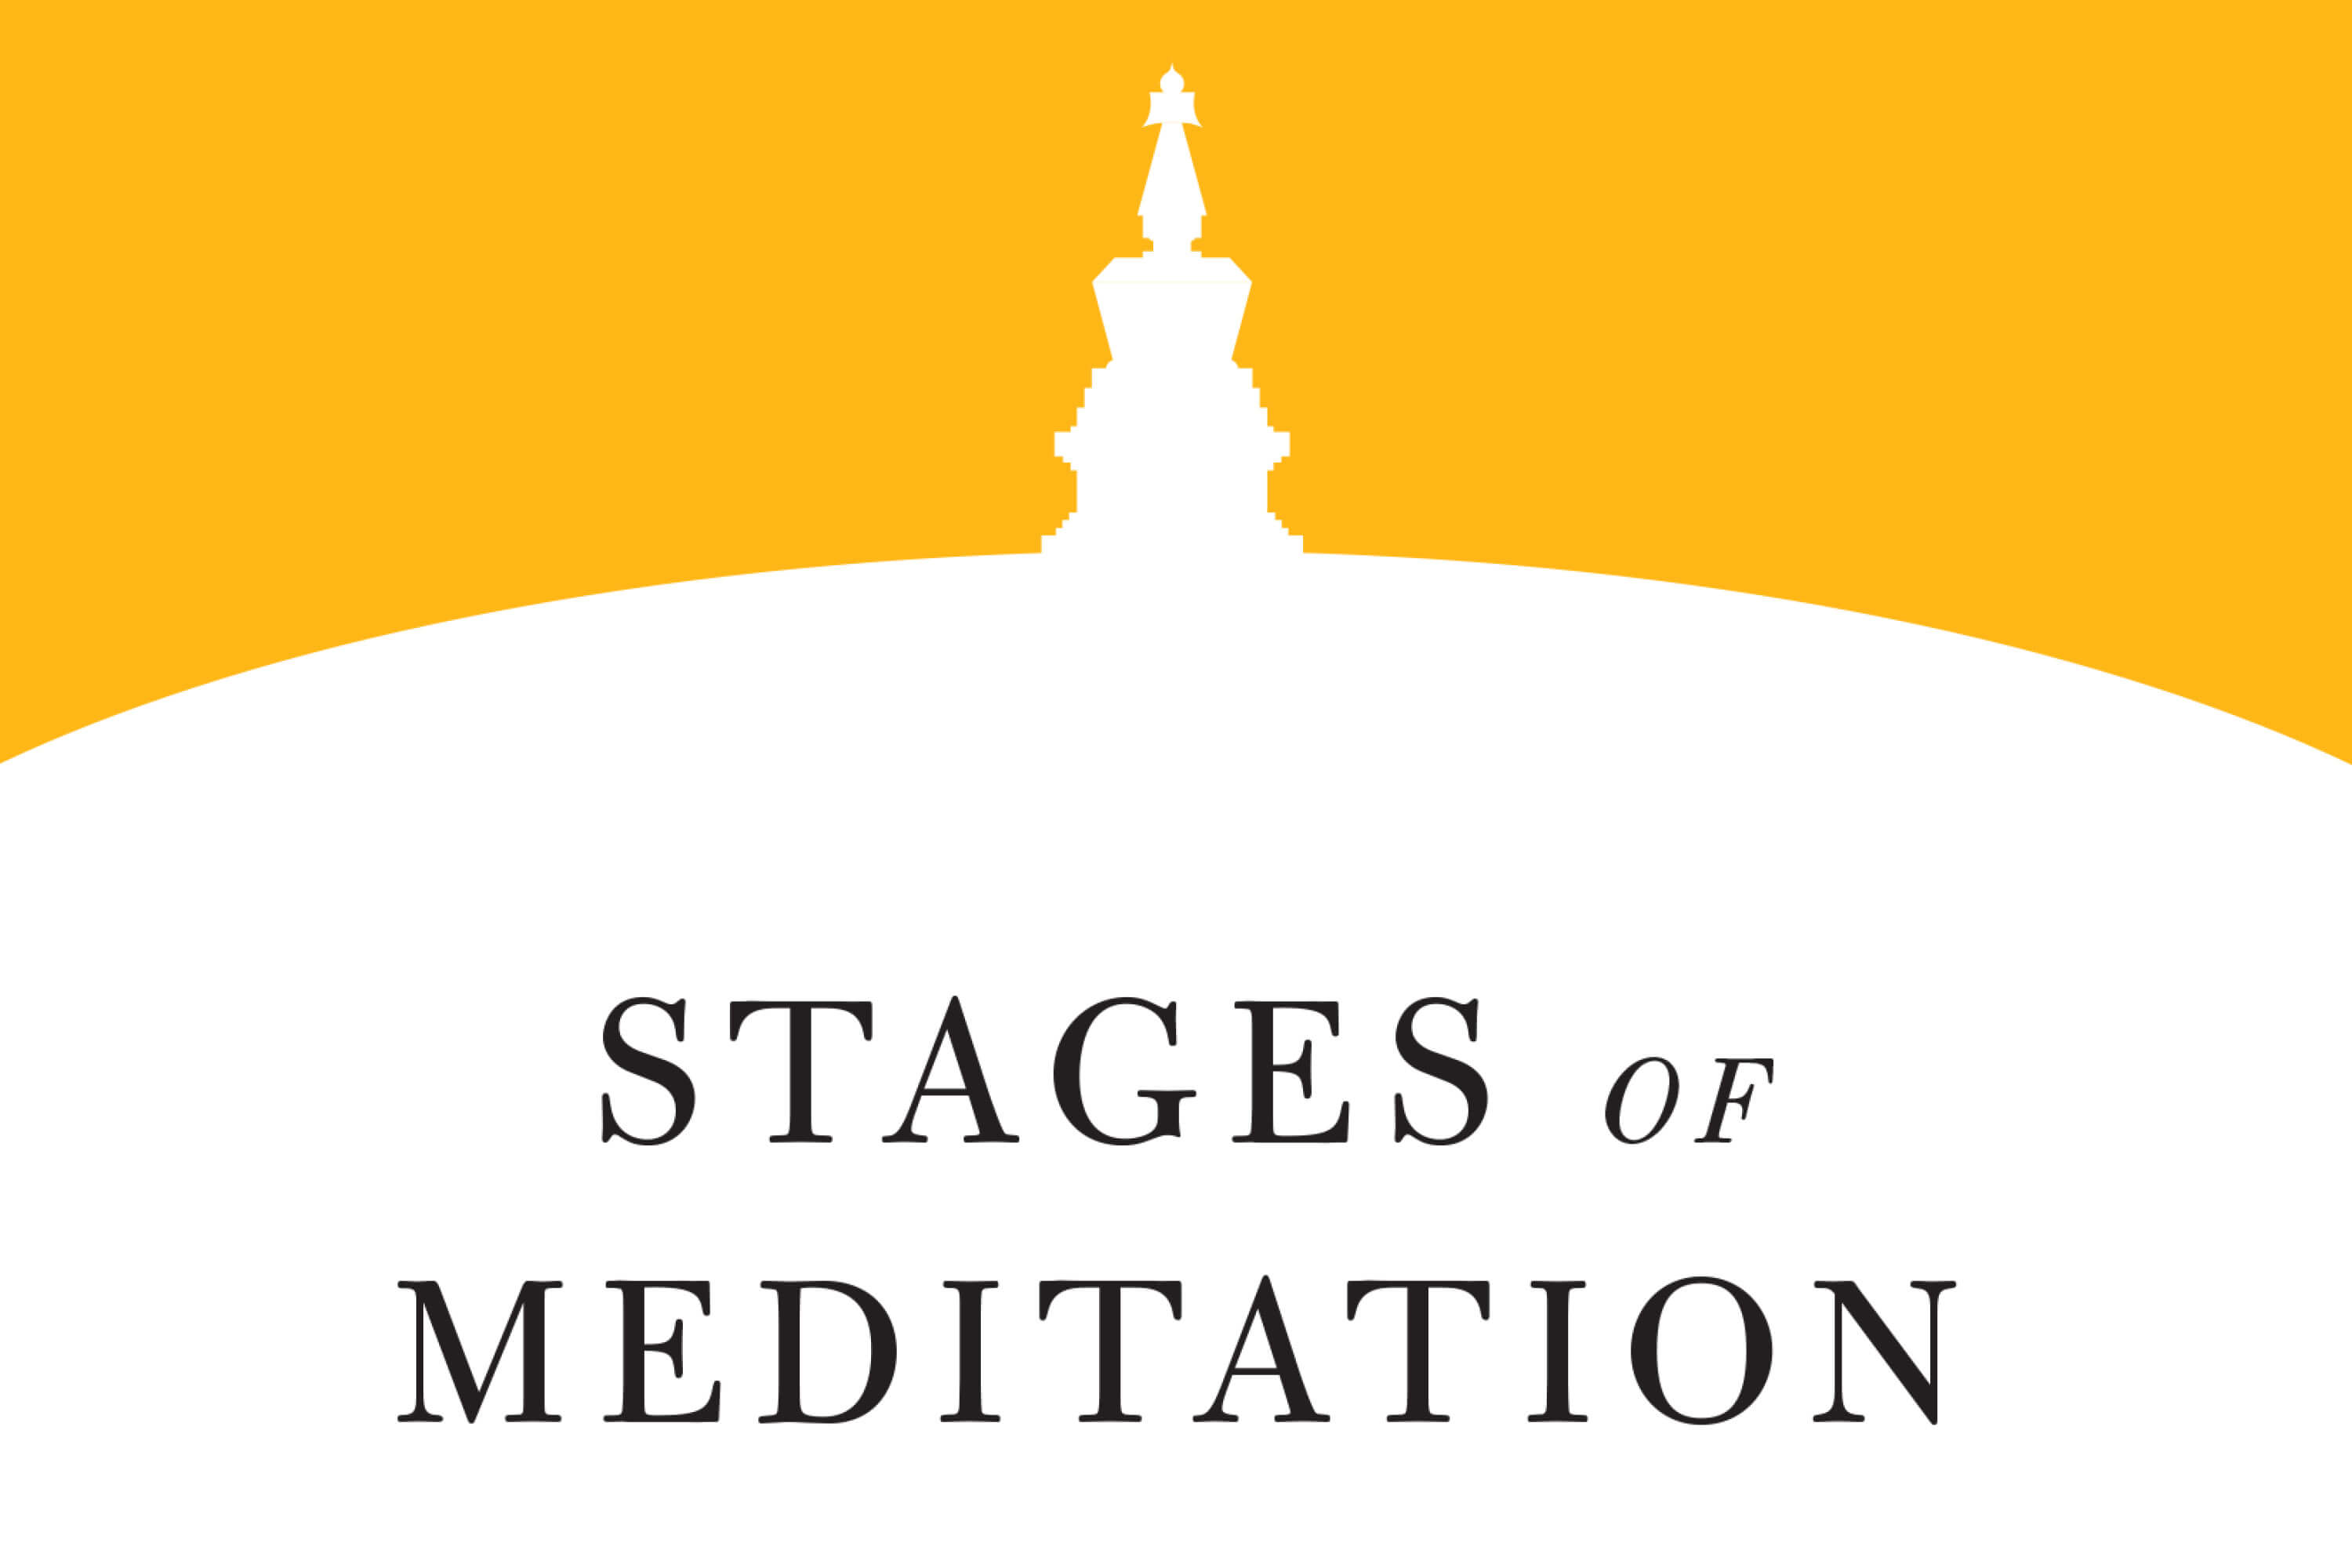 Stages of Meditation